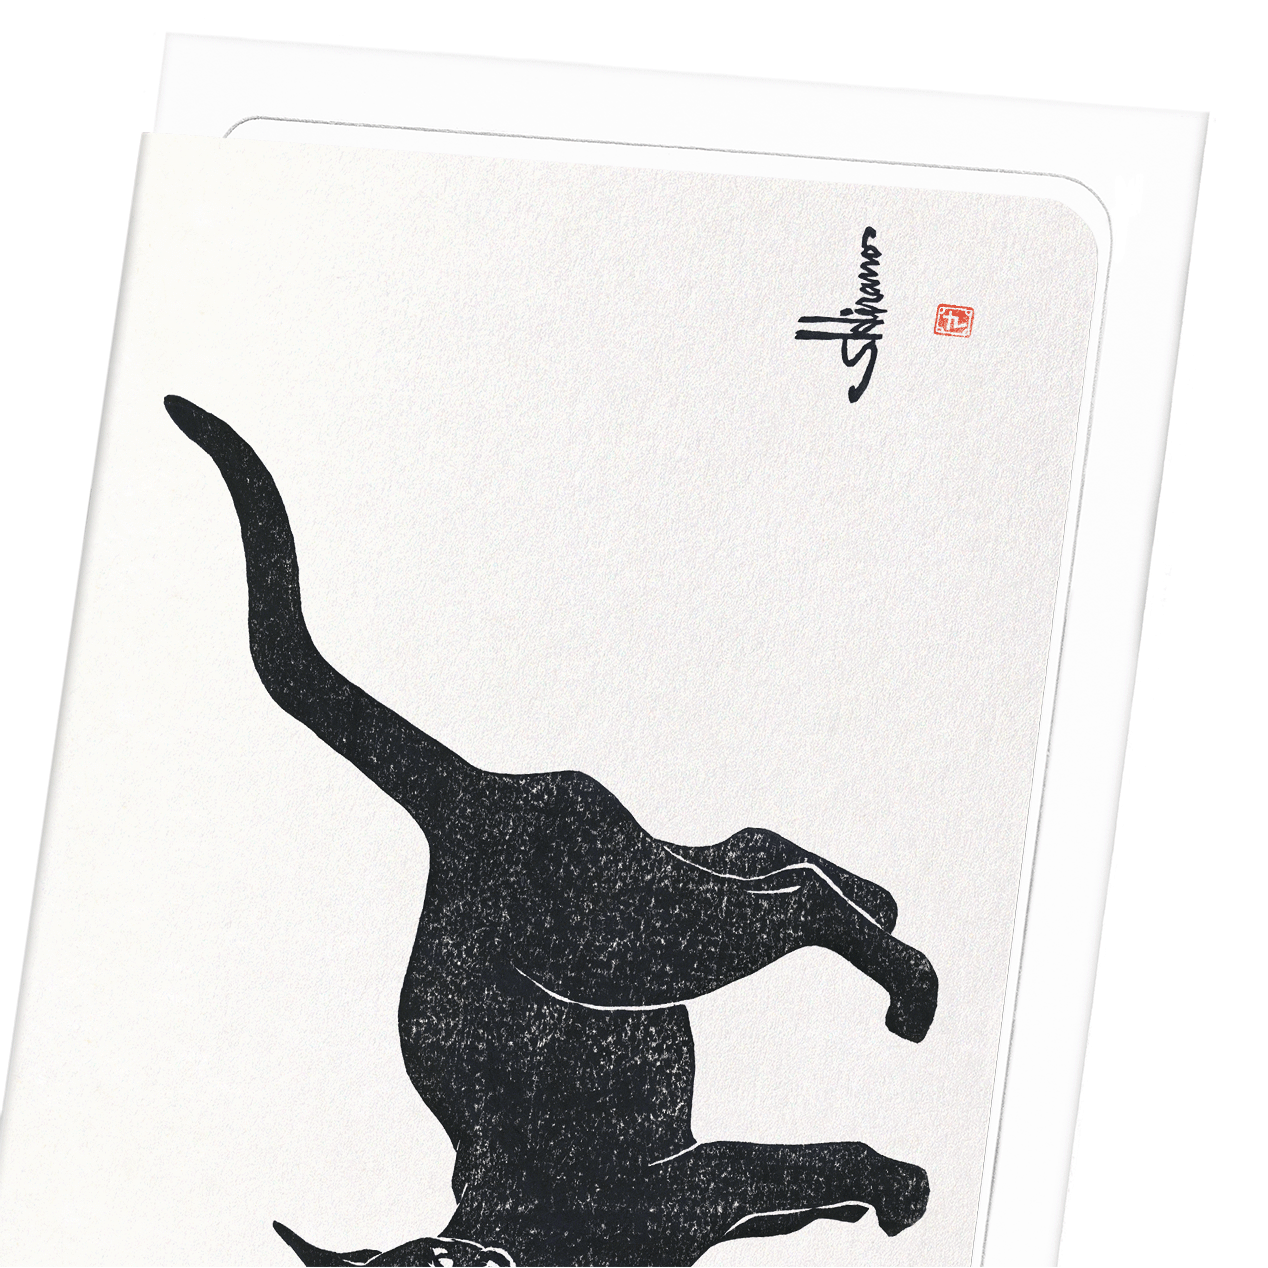 CAT NO.1: Japanese Greeting Card